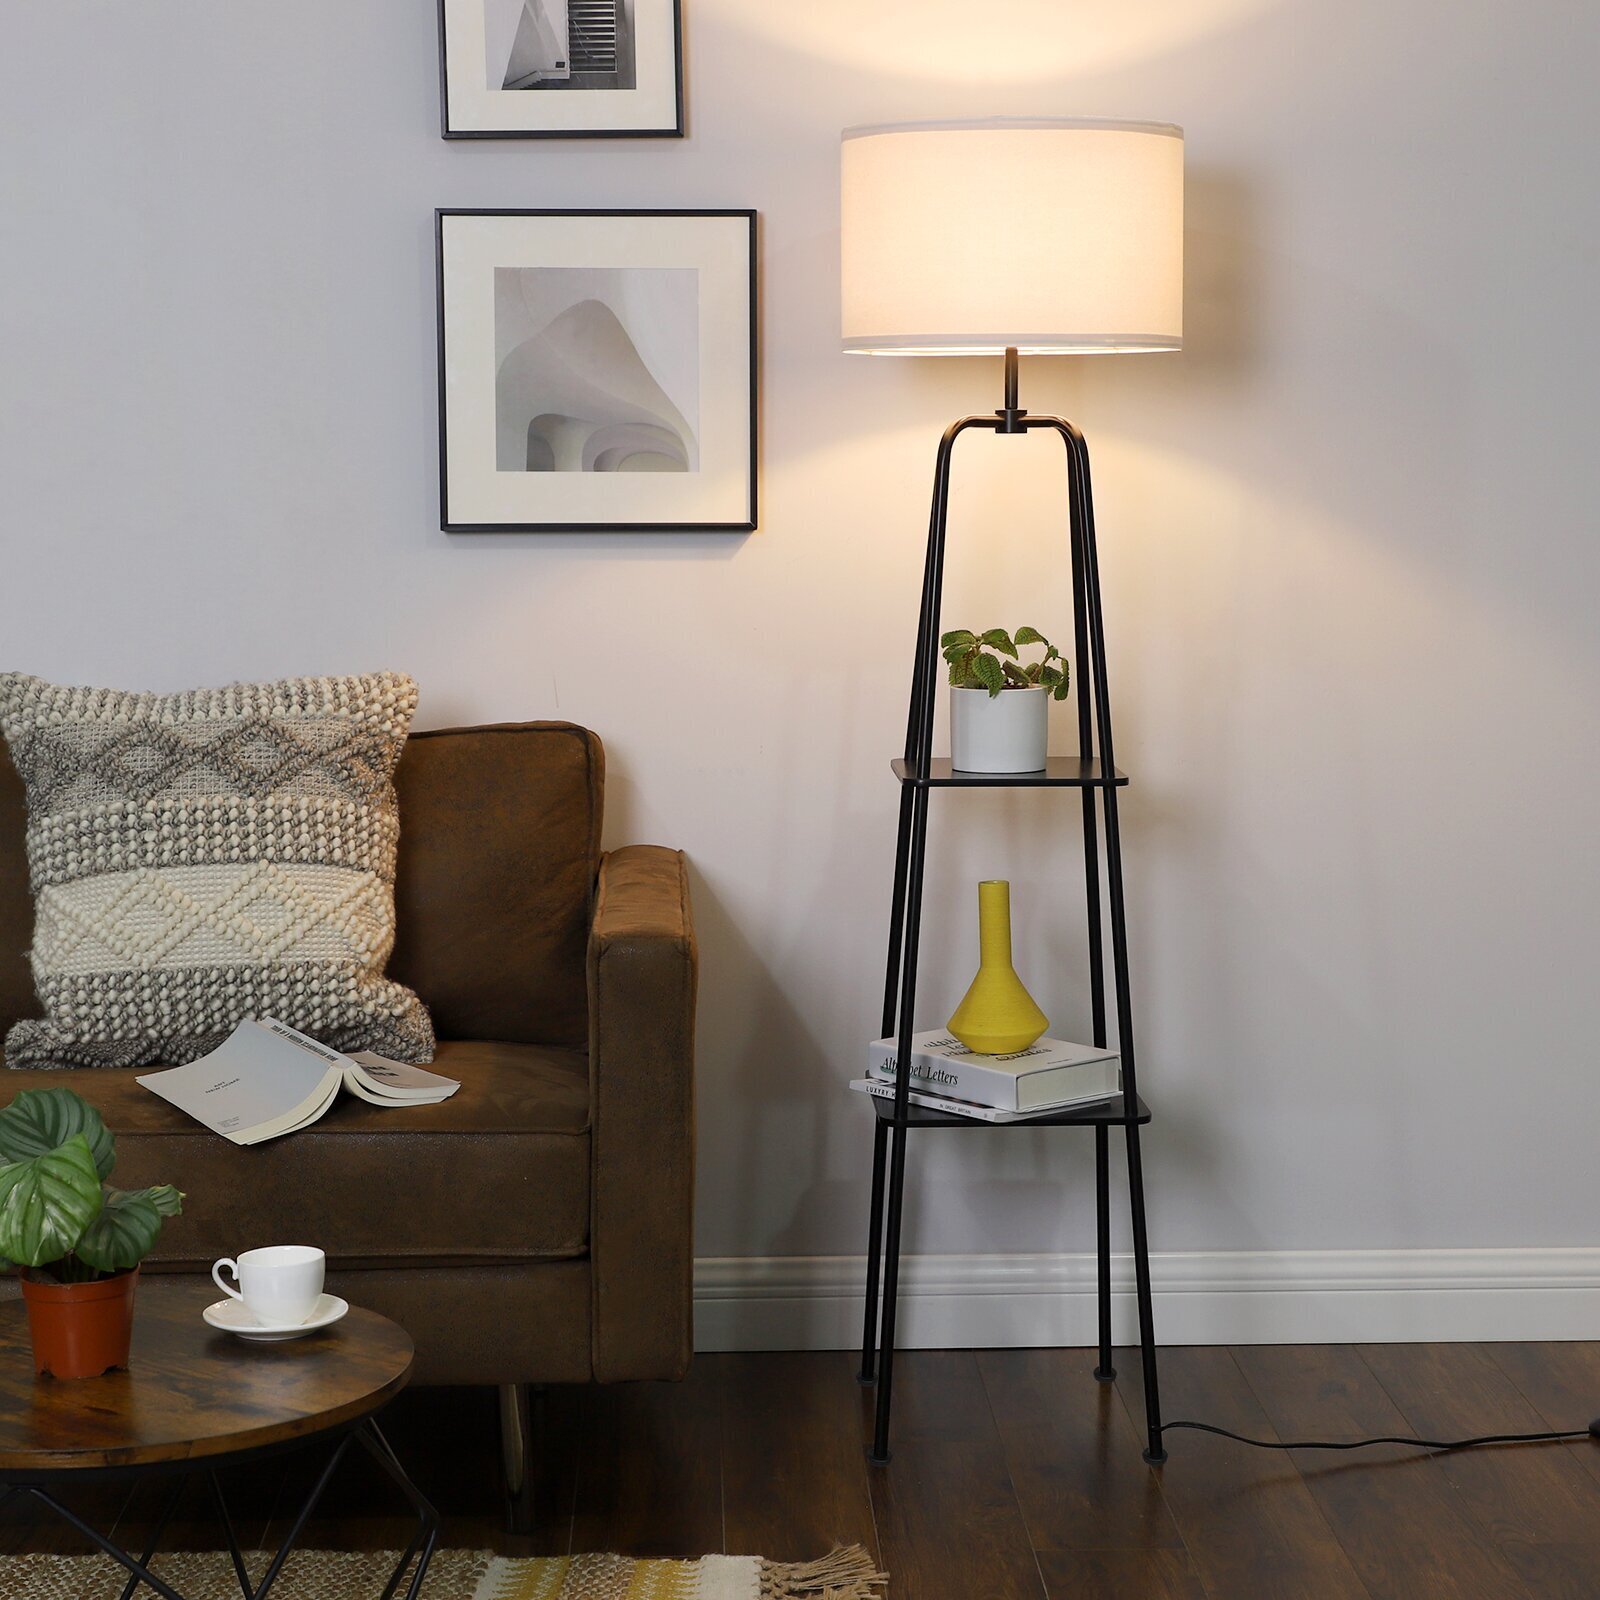 Modern Lamp with Shelves